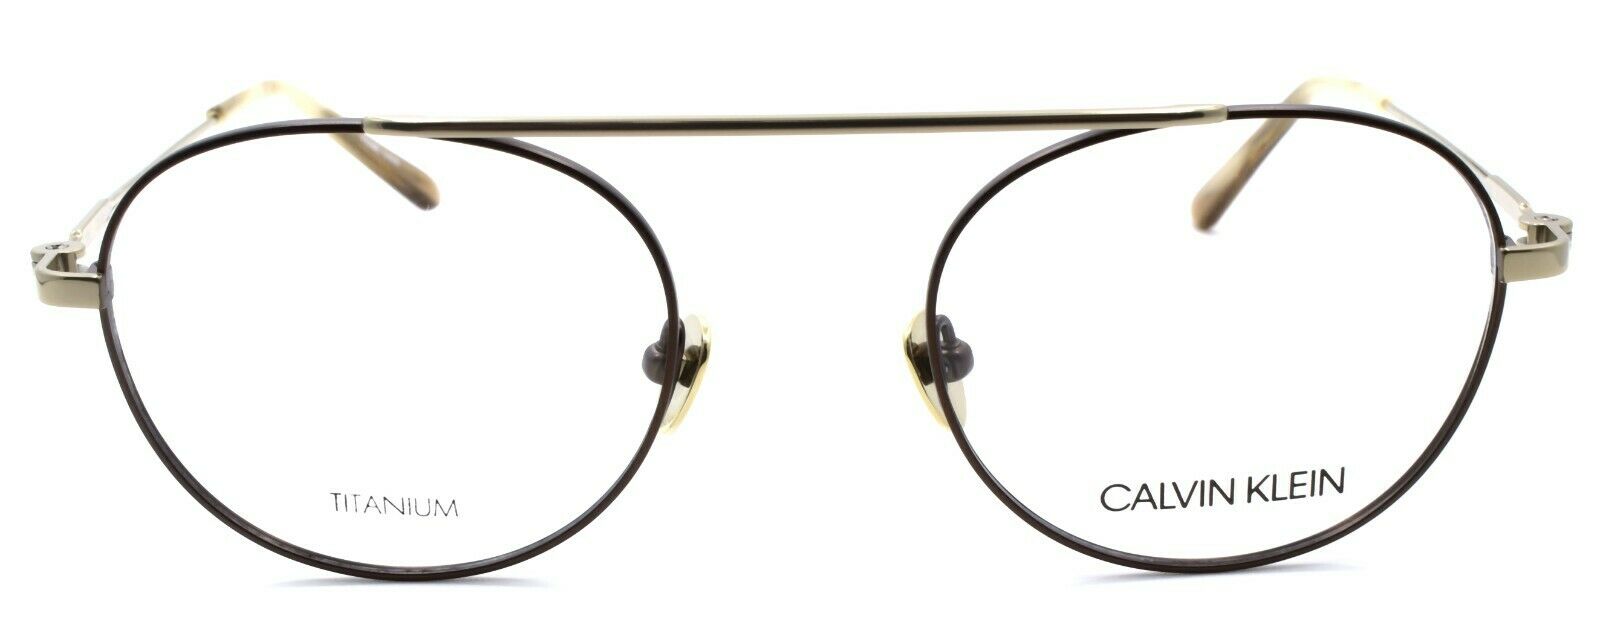 2-Calvin Klein C19151 050 Men's Eyeglasses Frames Titanium 50-20-145 Grey-883901121704-IKSpecs